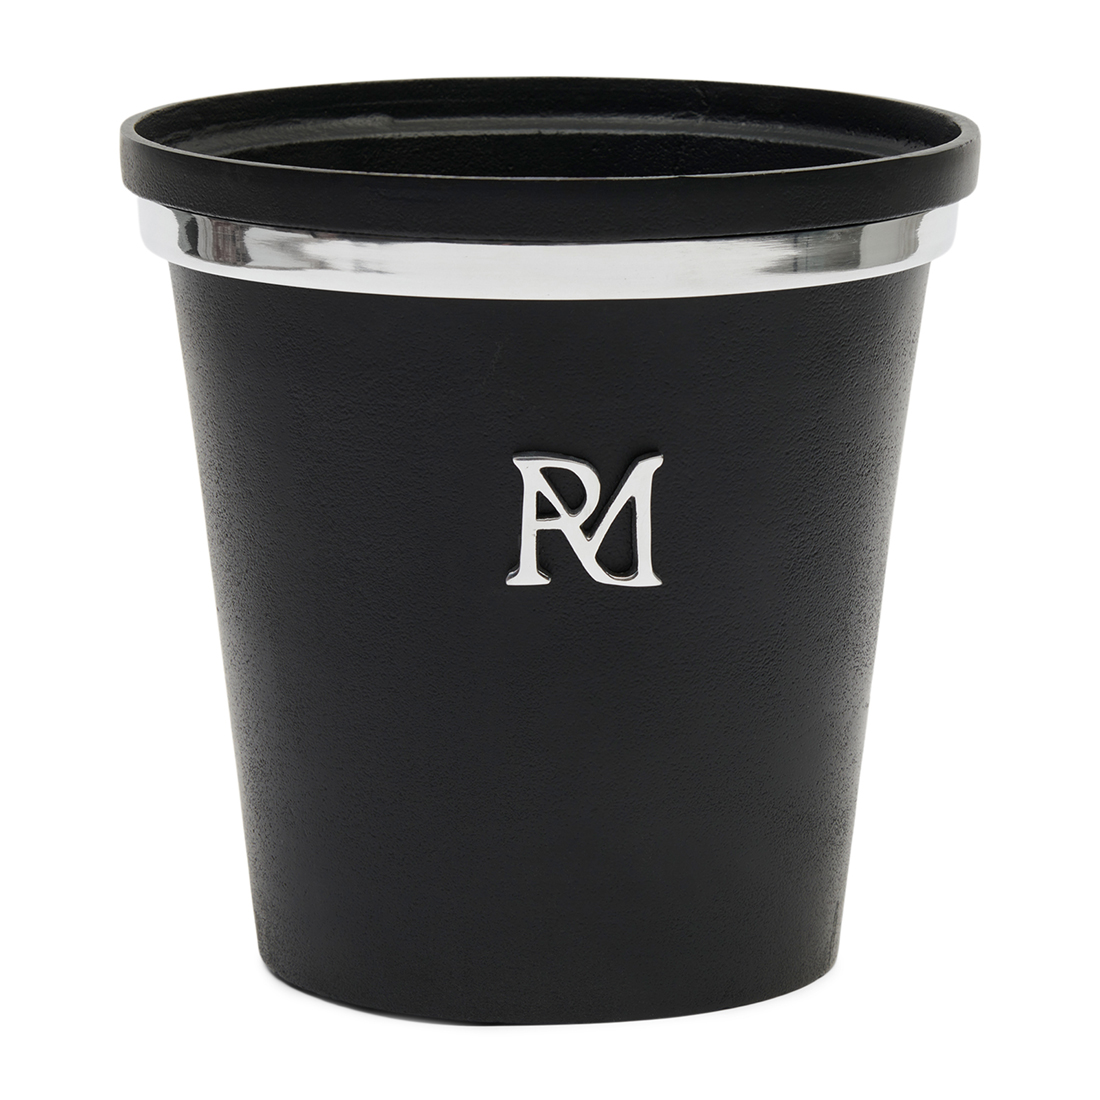 Riviera Maison Wijnkoeler zwart - RM Monogram Wine Cooler